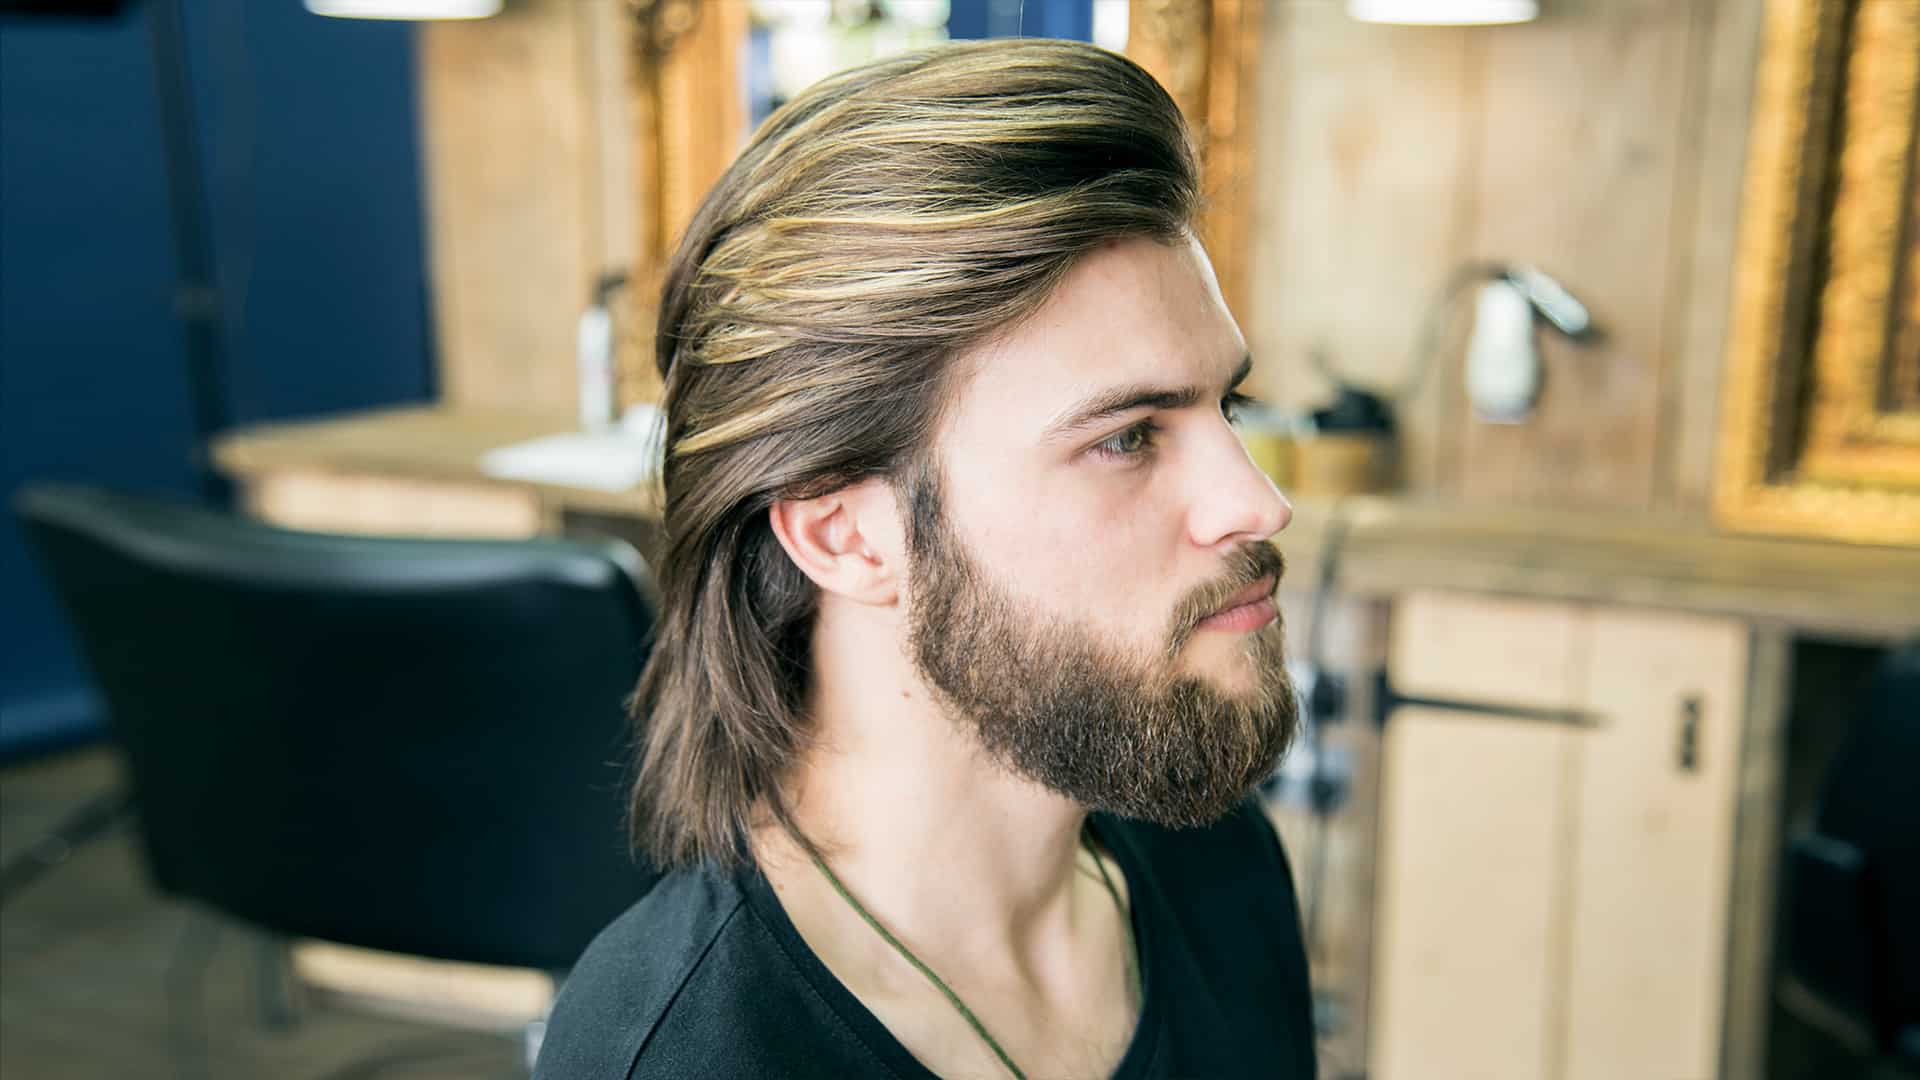 Long Hair Tips For Men: How To Grow & Maintain Long Hair